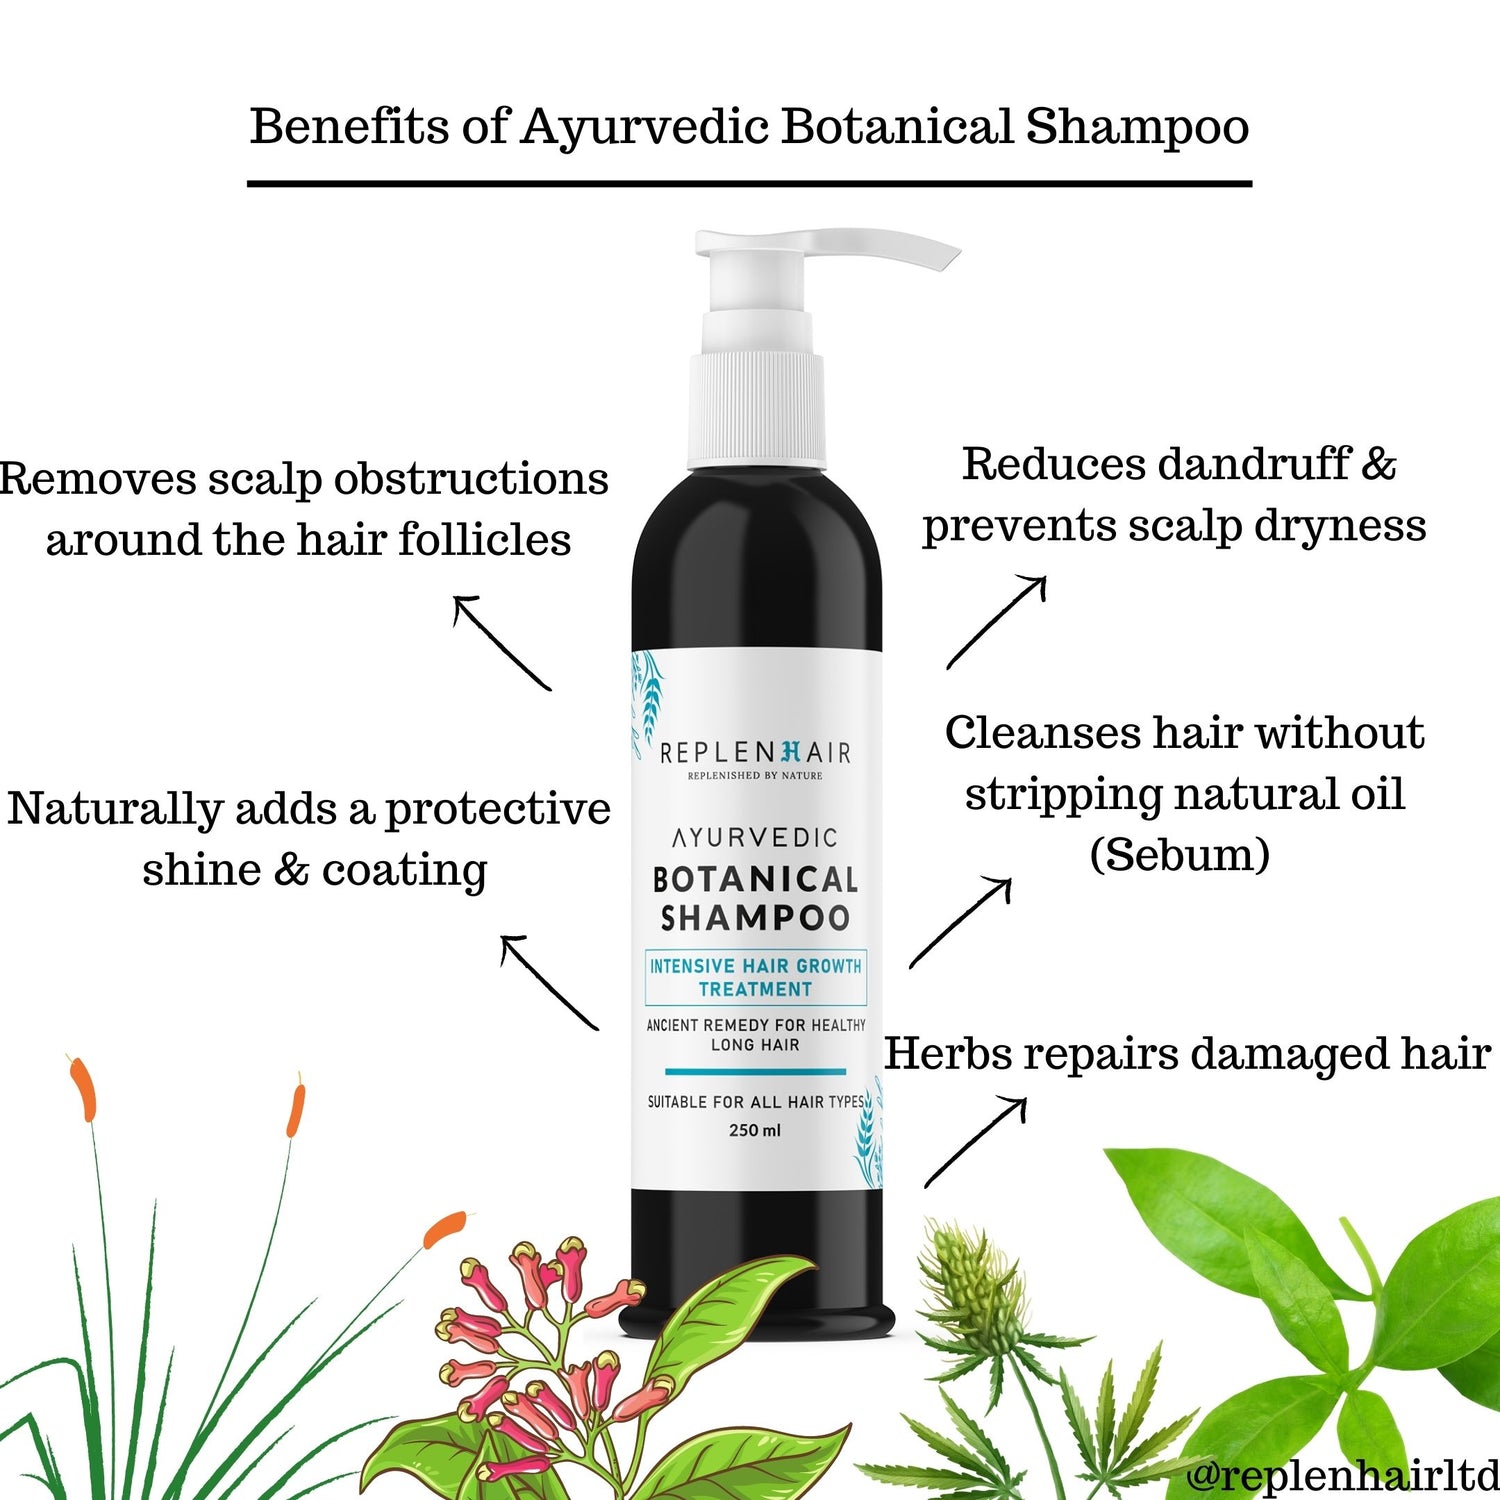 Ayurvedic Botanical Shampoo